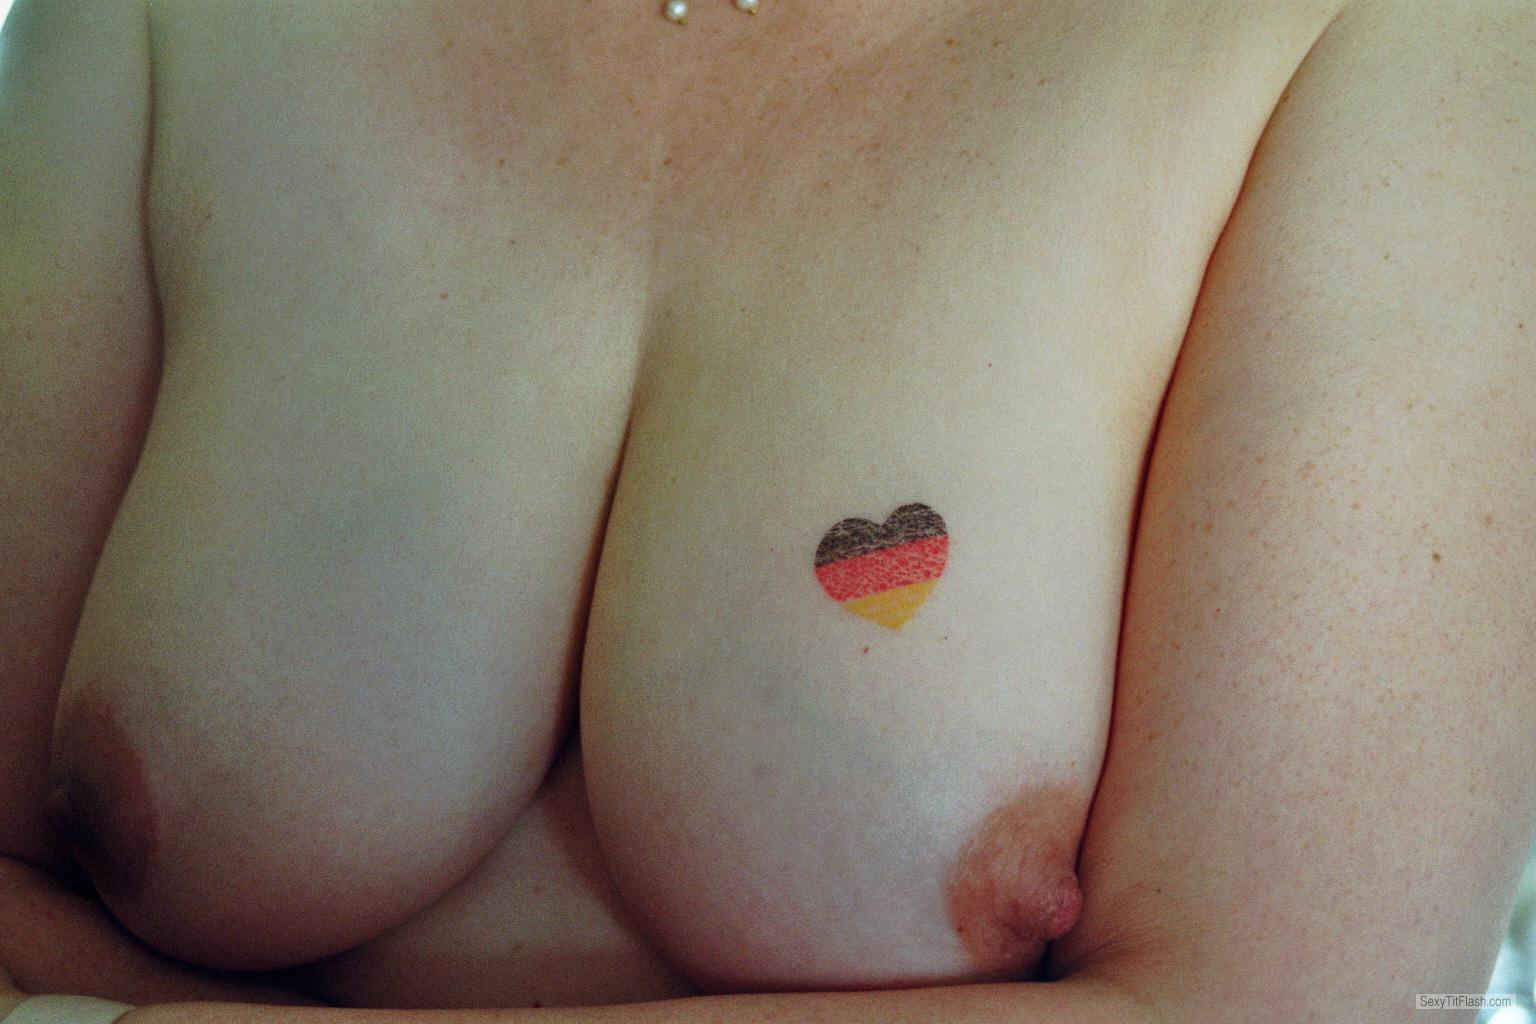 Tit Flash: My Medium Tits - Good Look from Germany